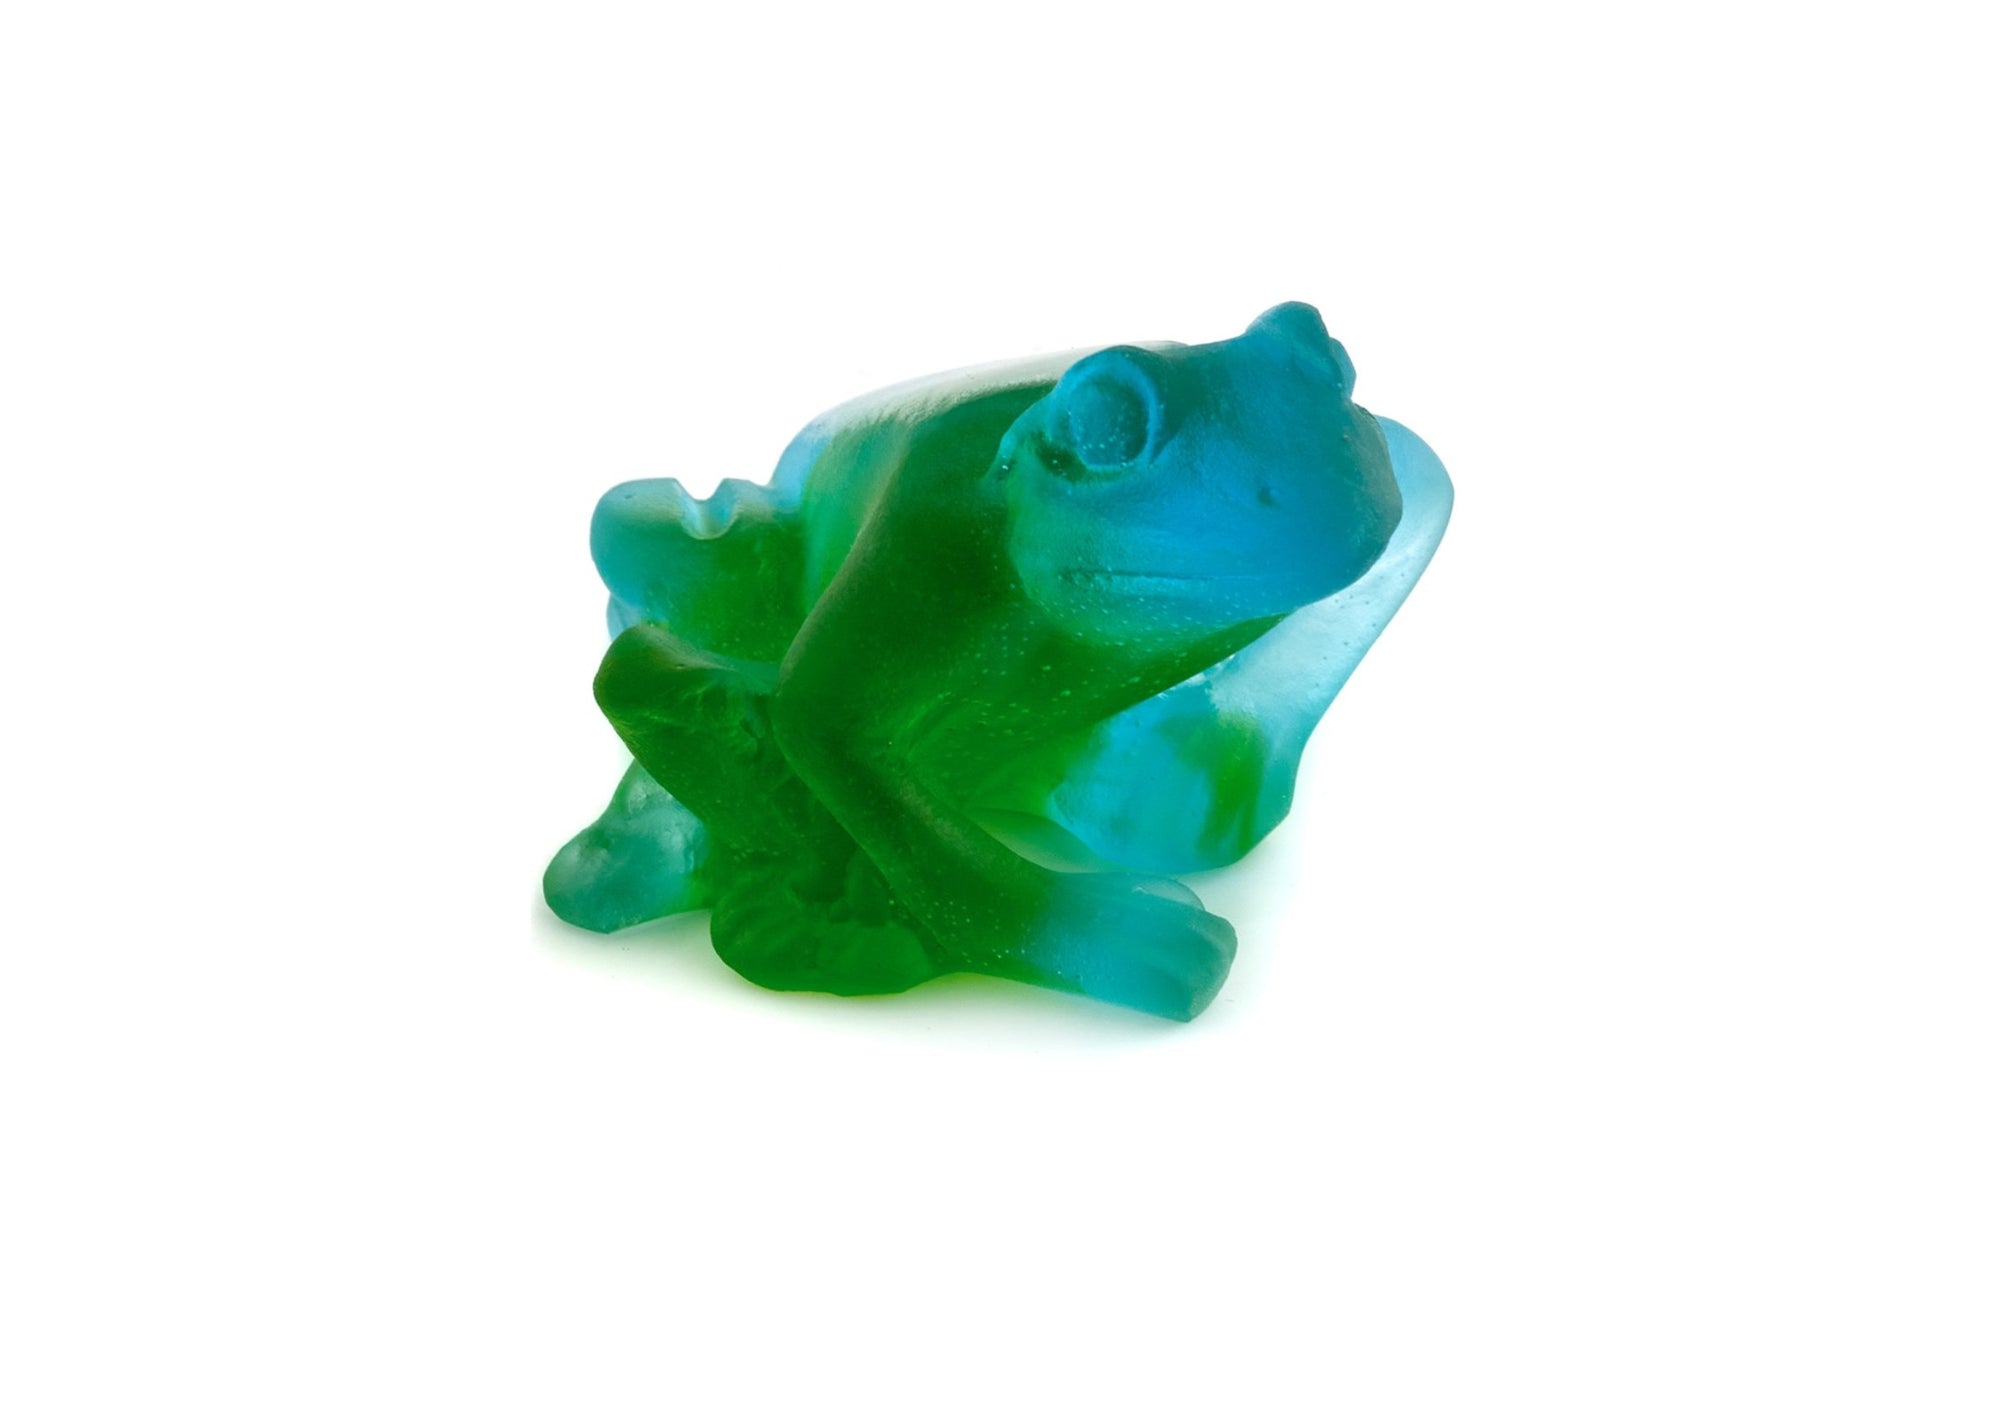 Turquoise frog